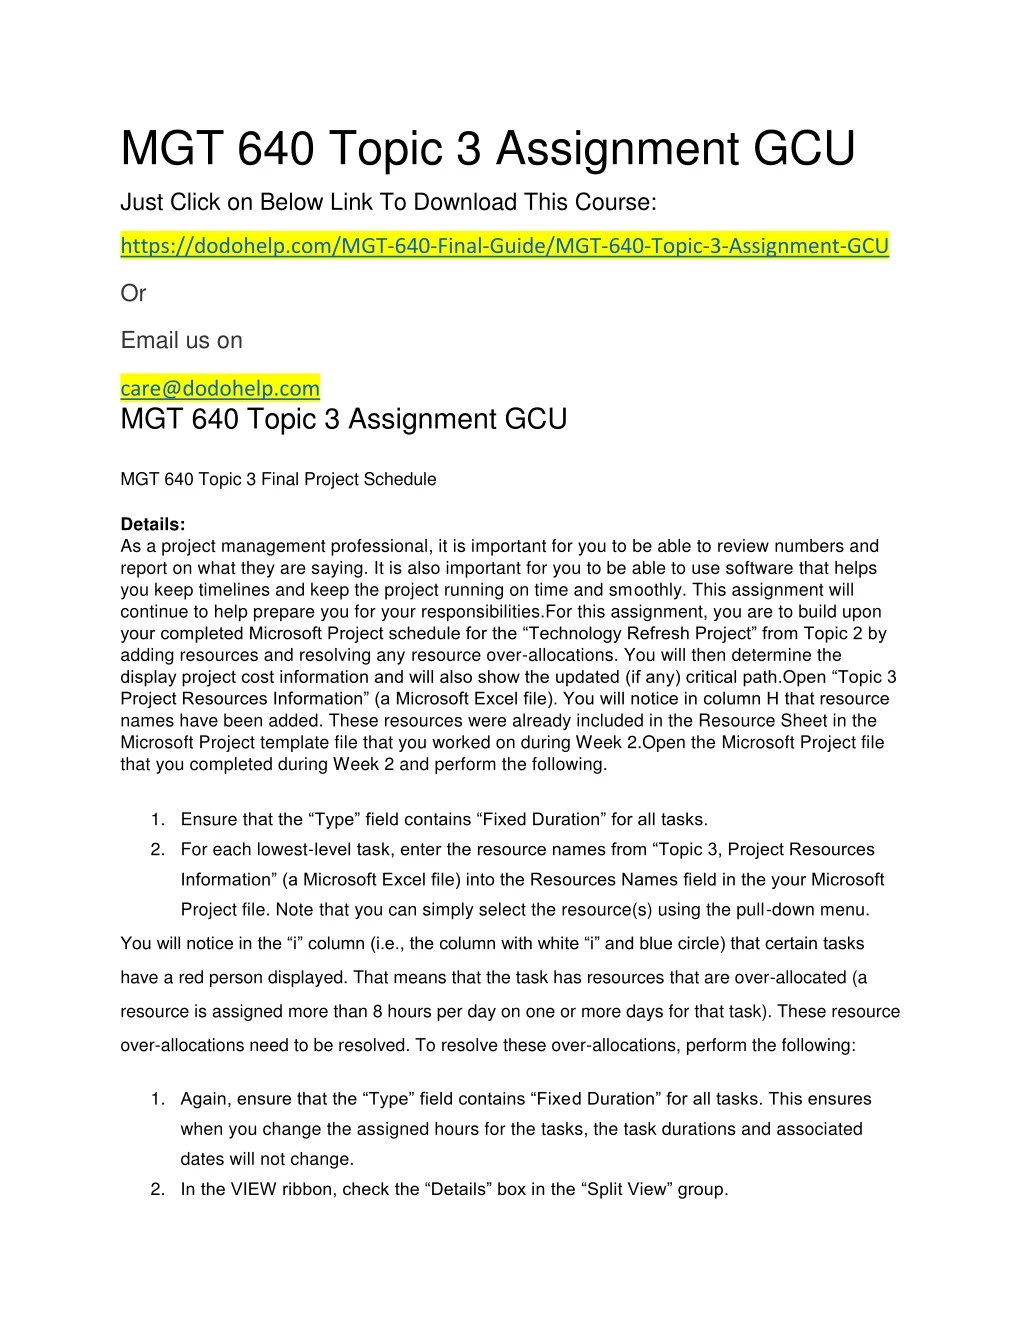 mgt 640 topic 3 assignment gcu